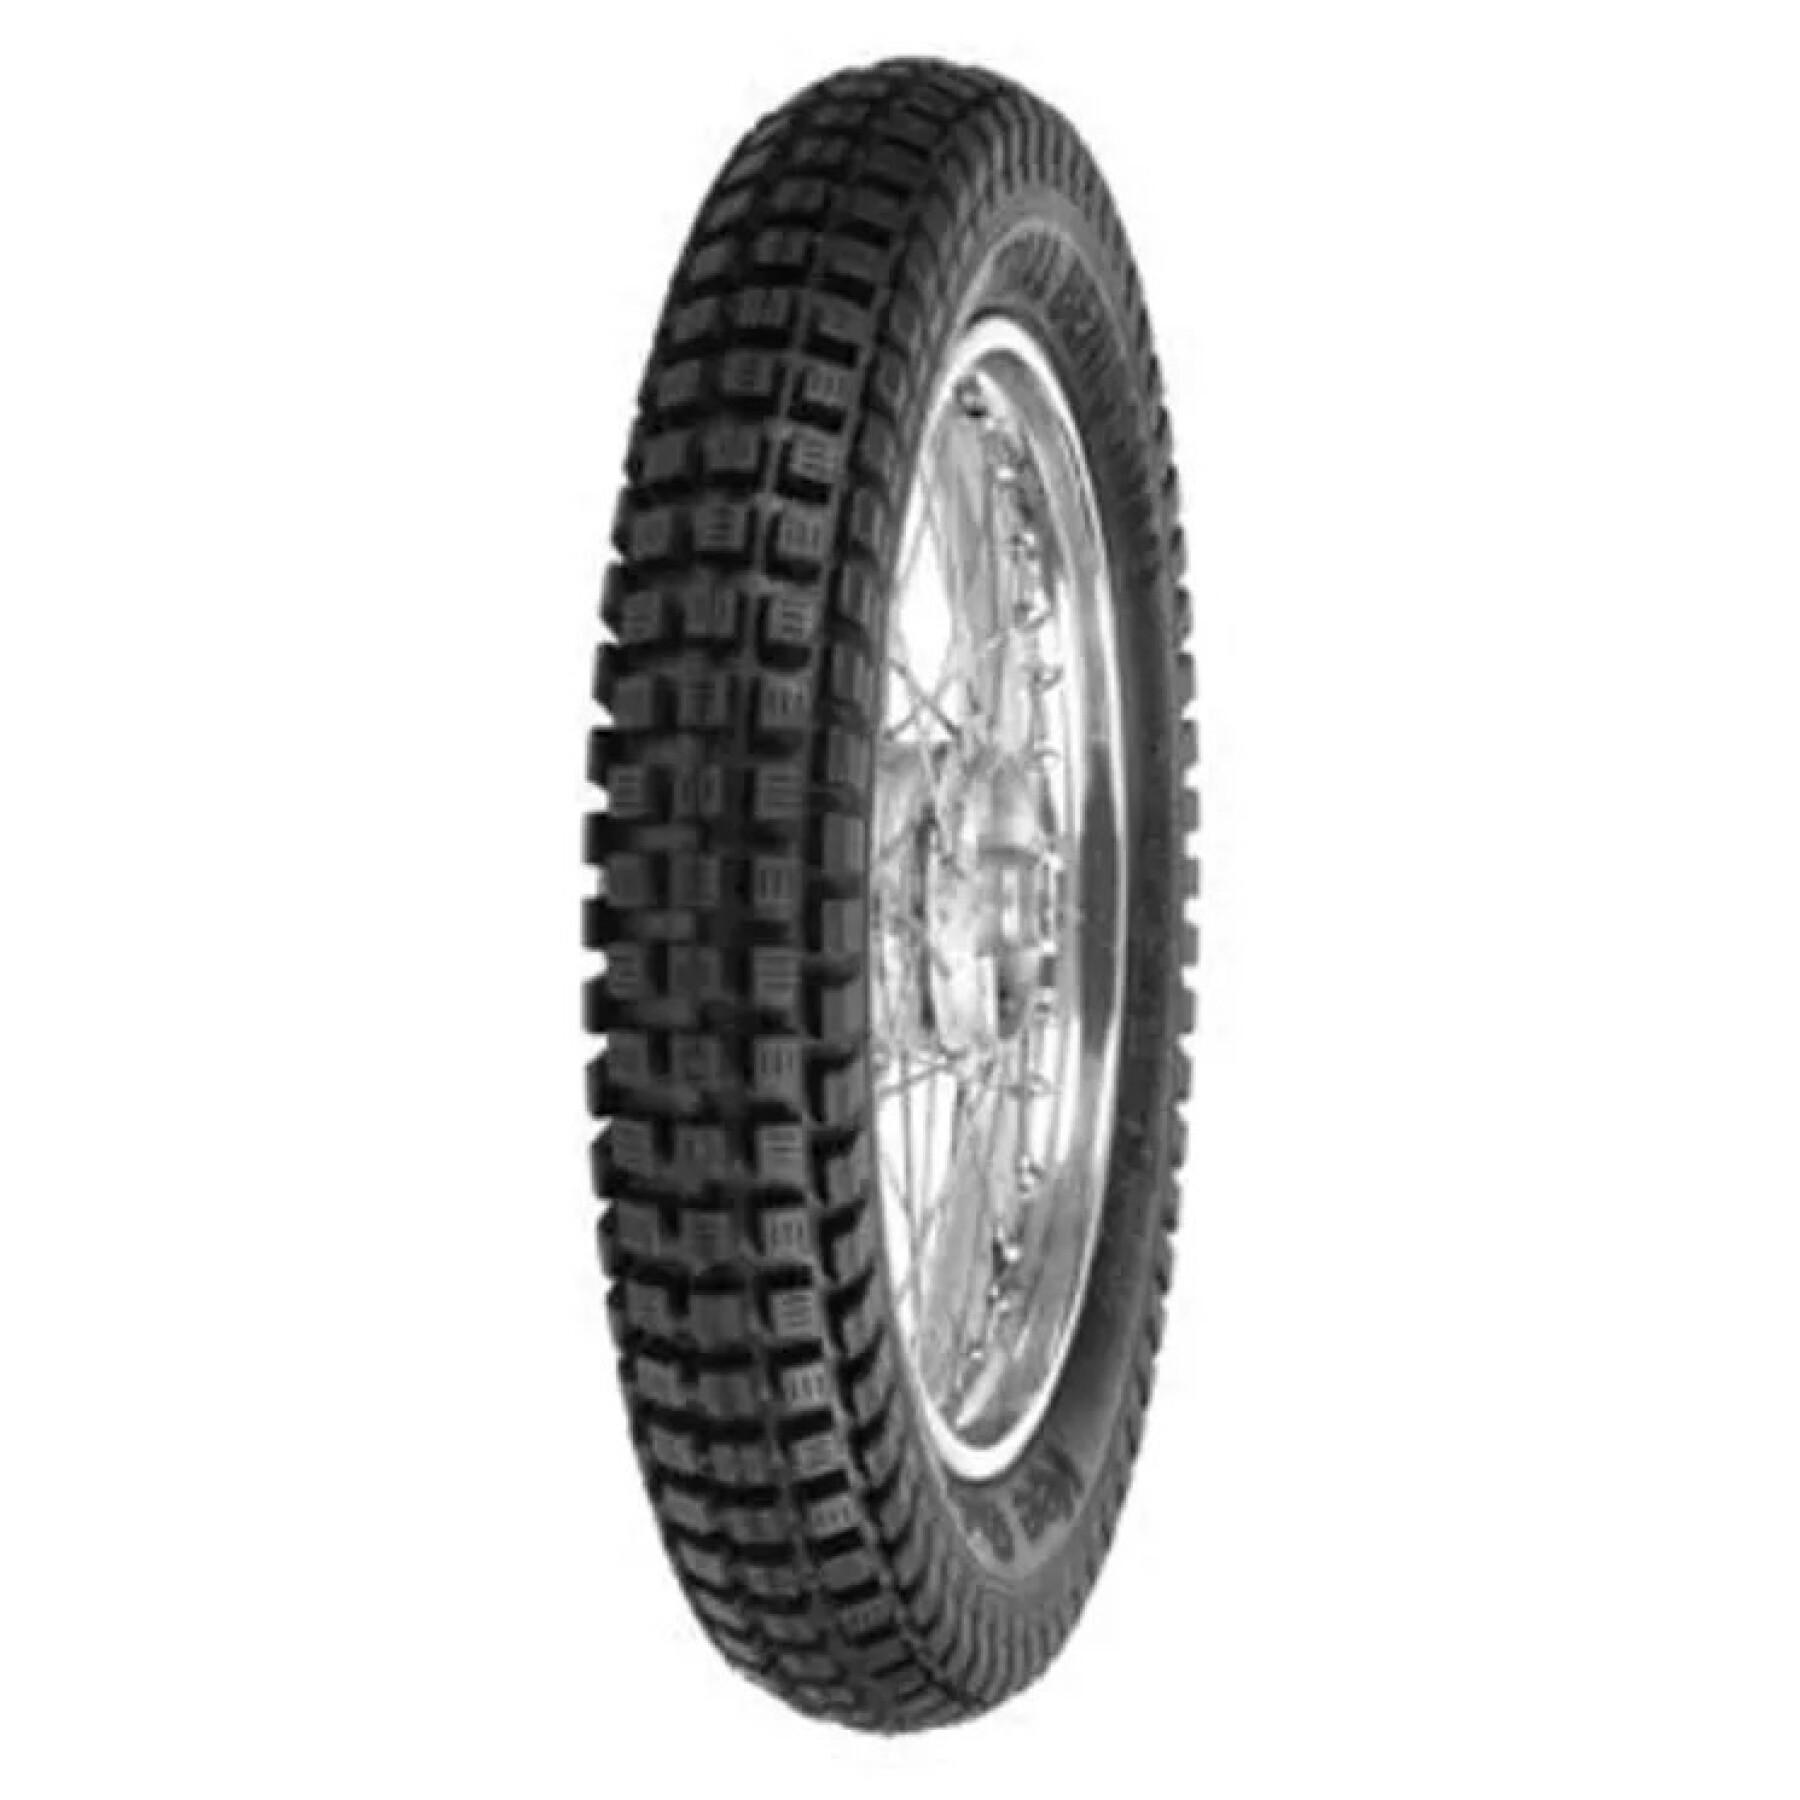 Neumáticos Vee Rubber 2,75-21 VRM 308R TT (5)